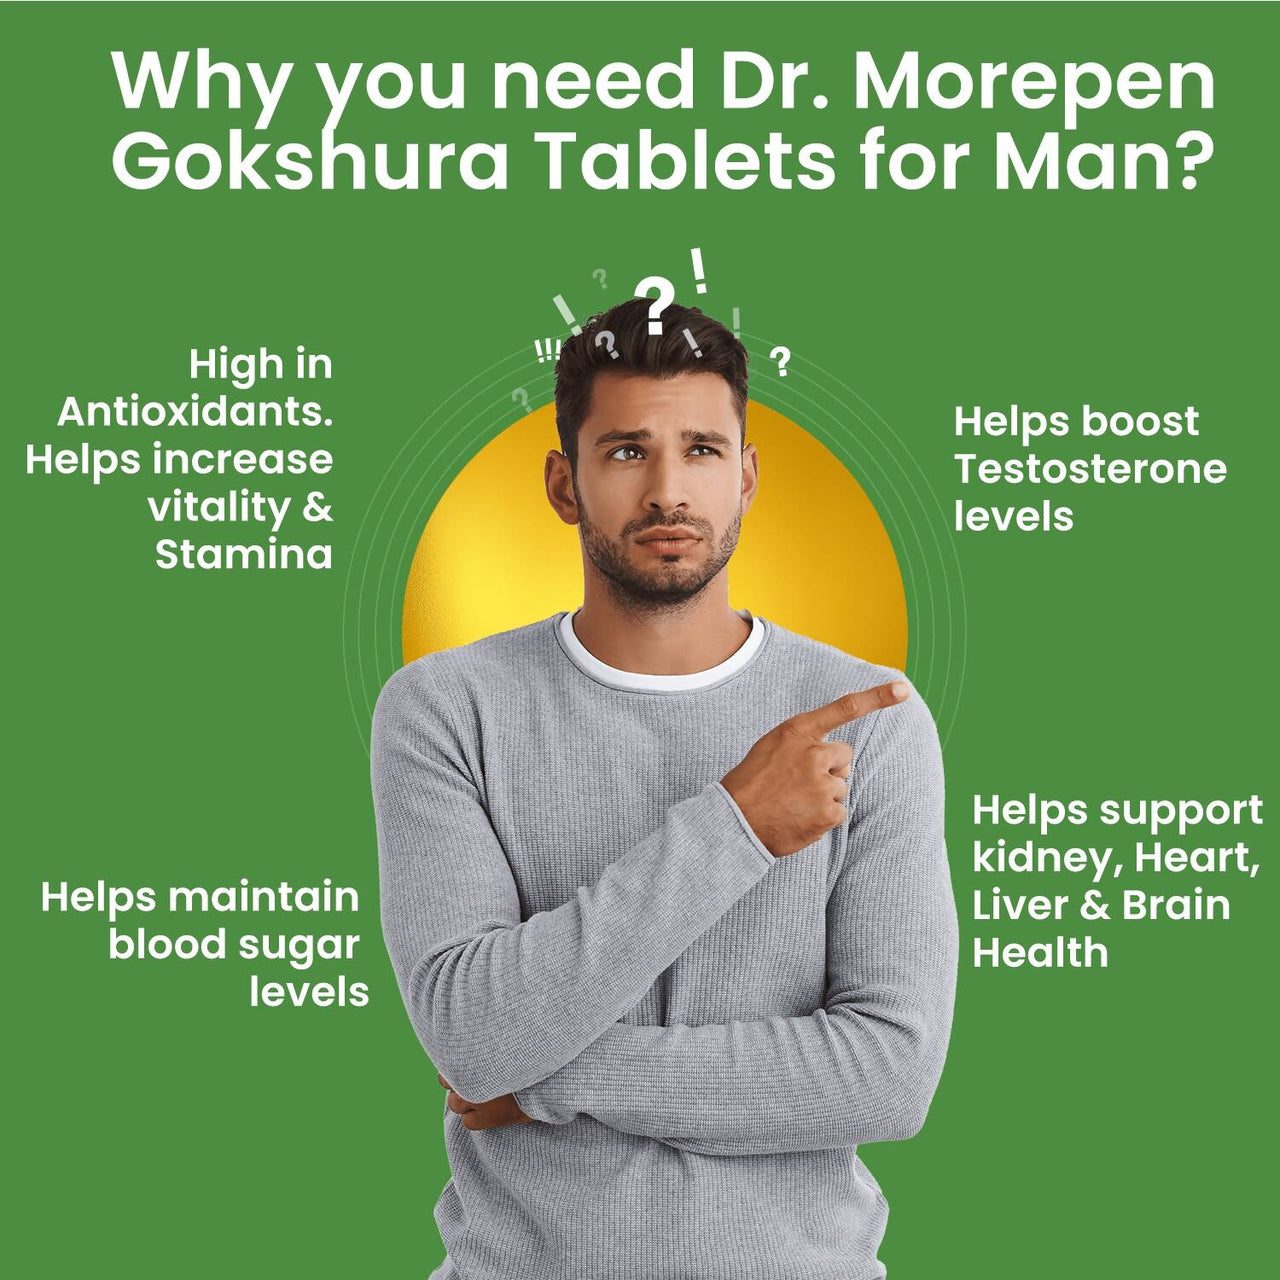 Dr. Morepen Gokshura and Testo Boost Tablets Combo for Men - Distacart